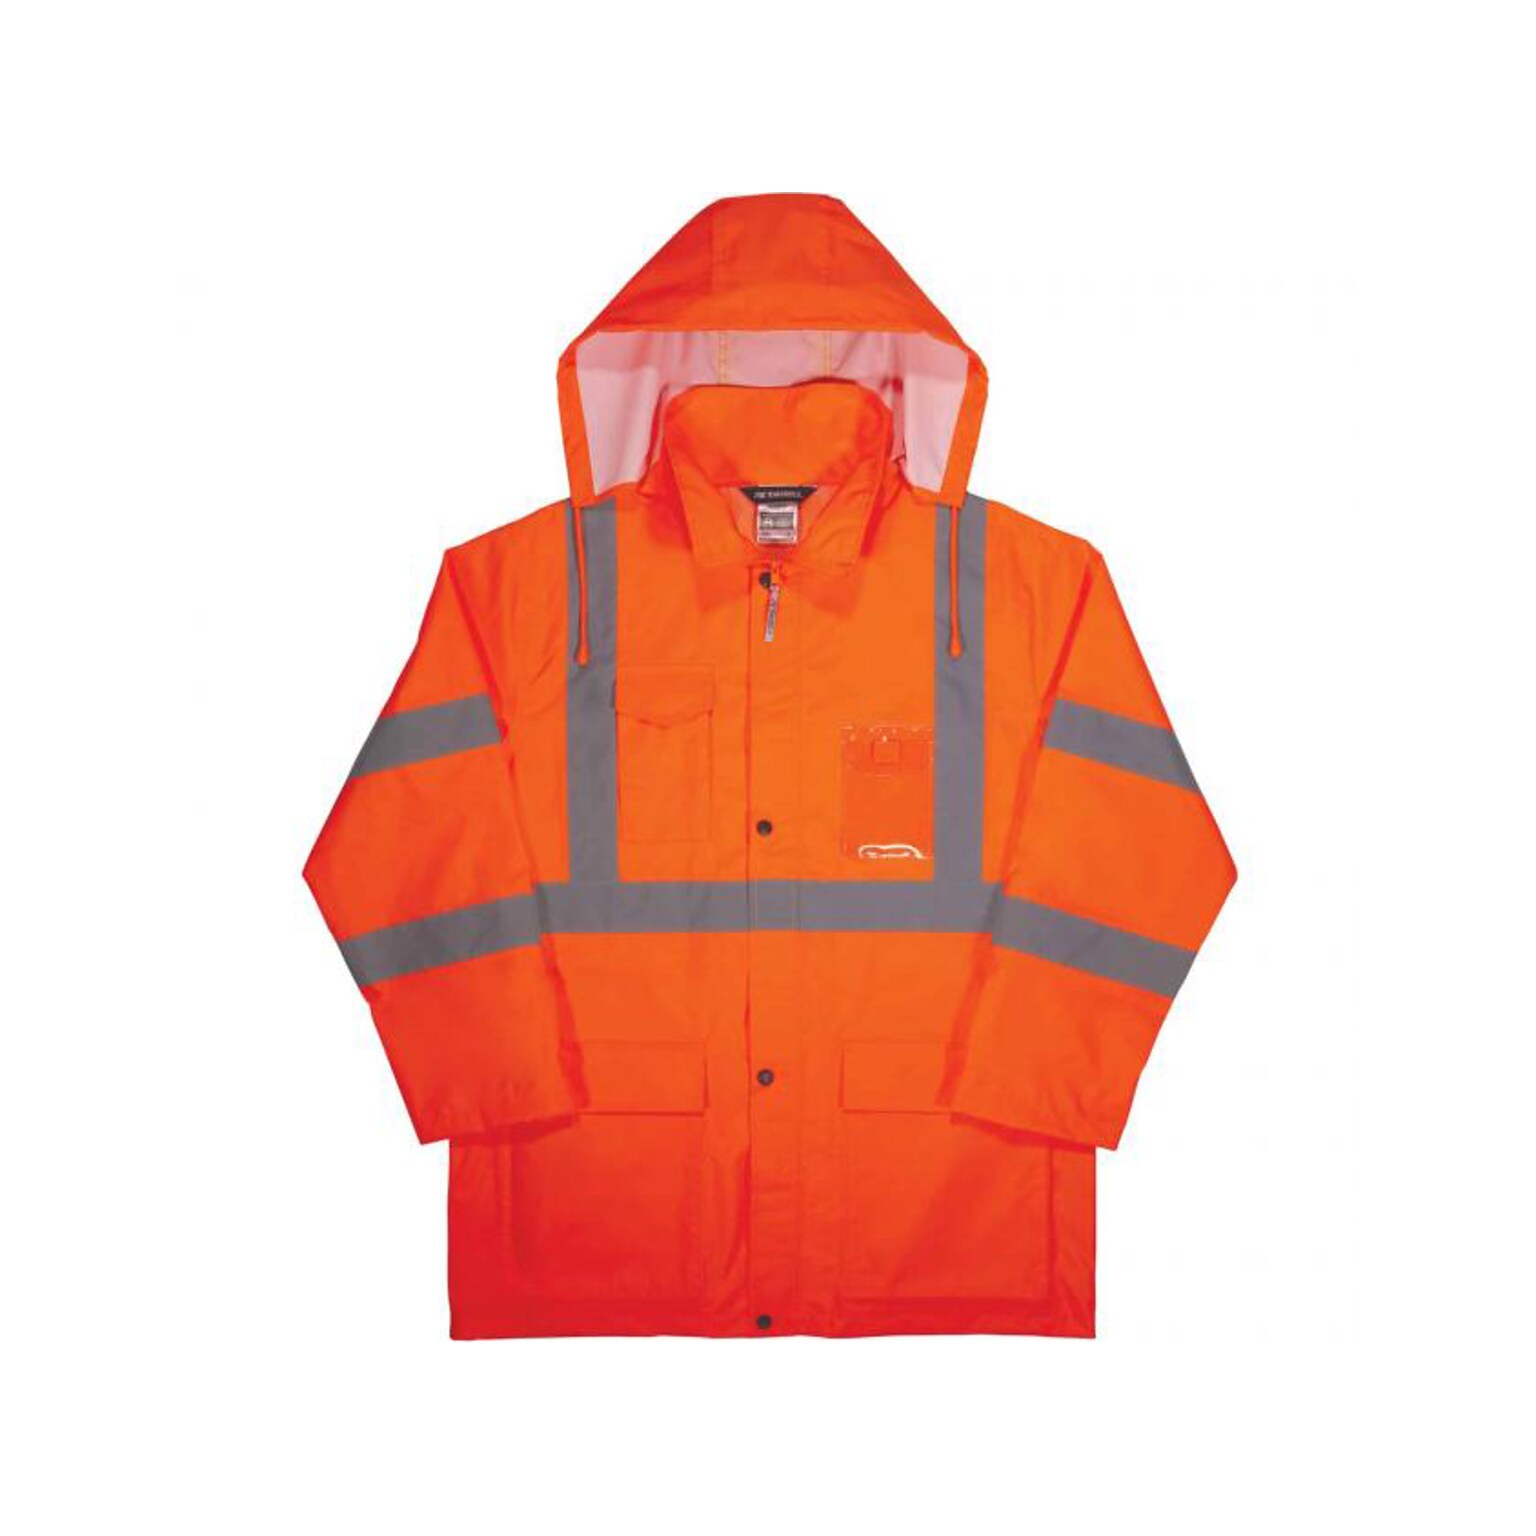 Ergodyne GloWear 8366 Lightweight High-Visibility Rain Jacket, ANSI Class R3, Orange, X-Large (24365)